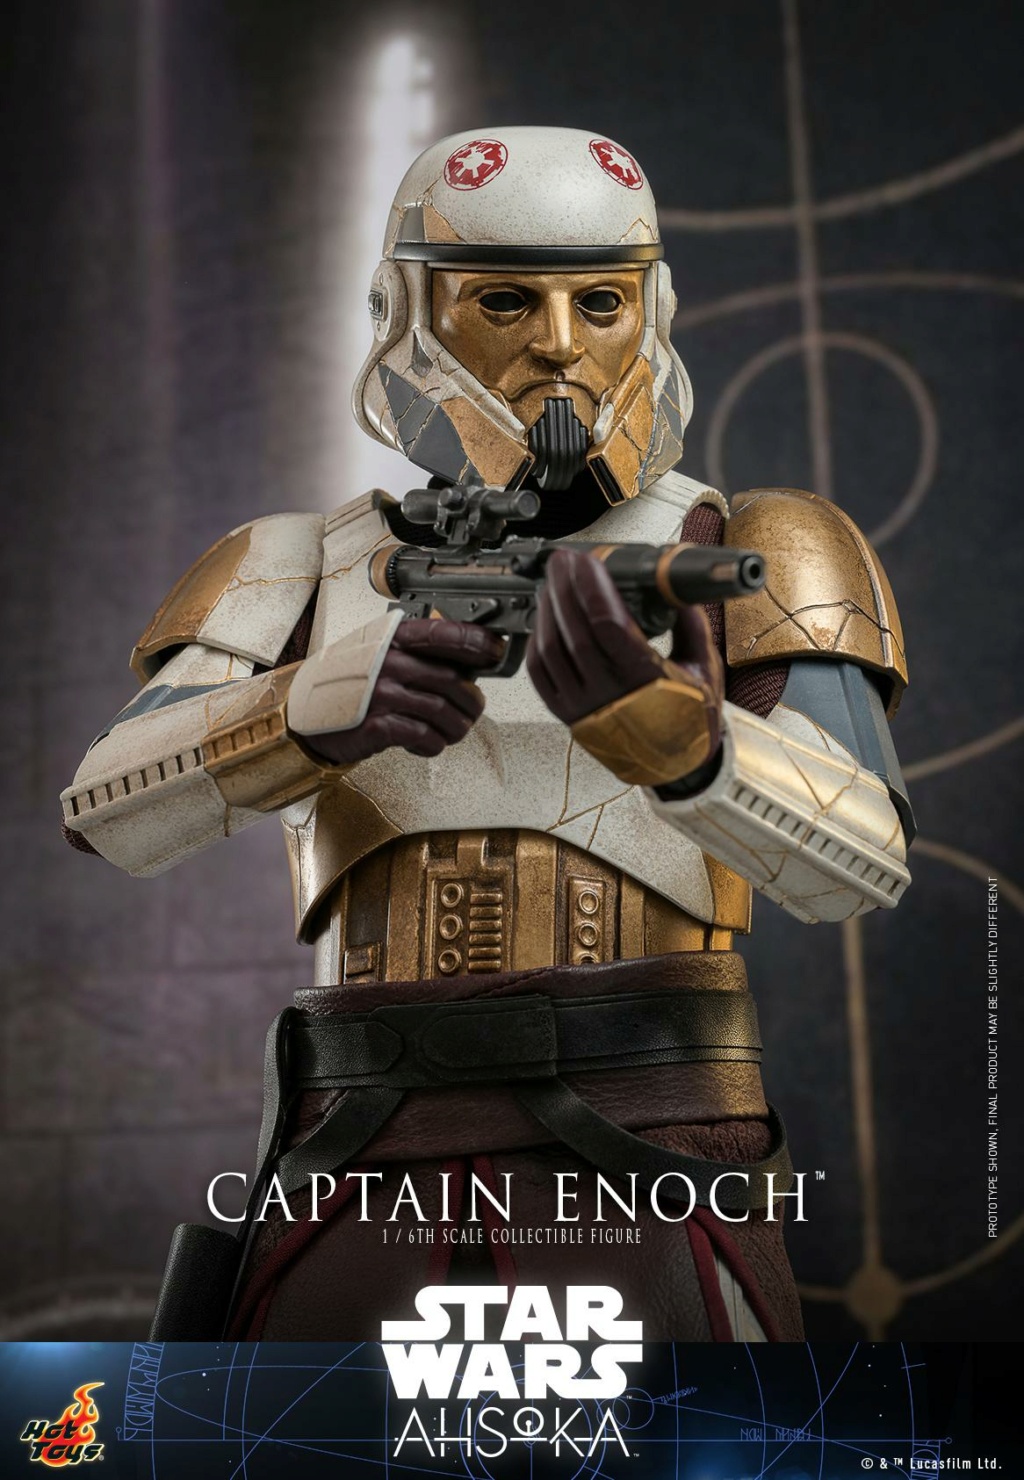 Star Wars: Ahsoka - 1/6th scale Captain Enoch Collectible Figure - Hot Toys Capta101